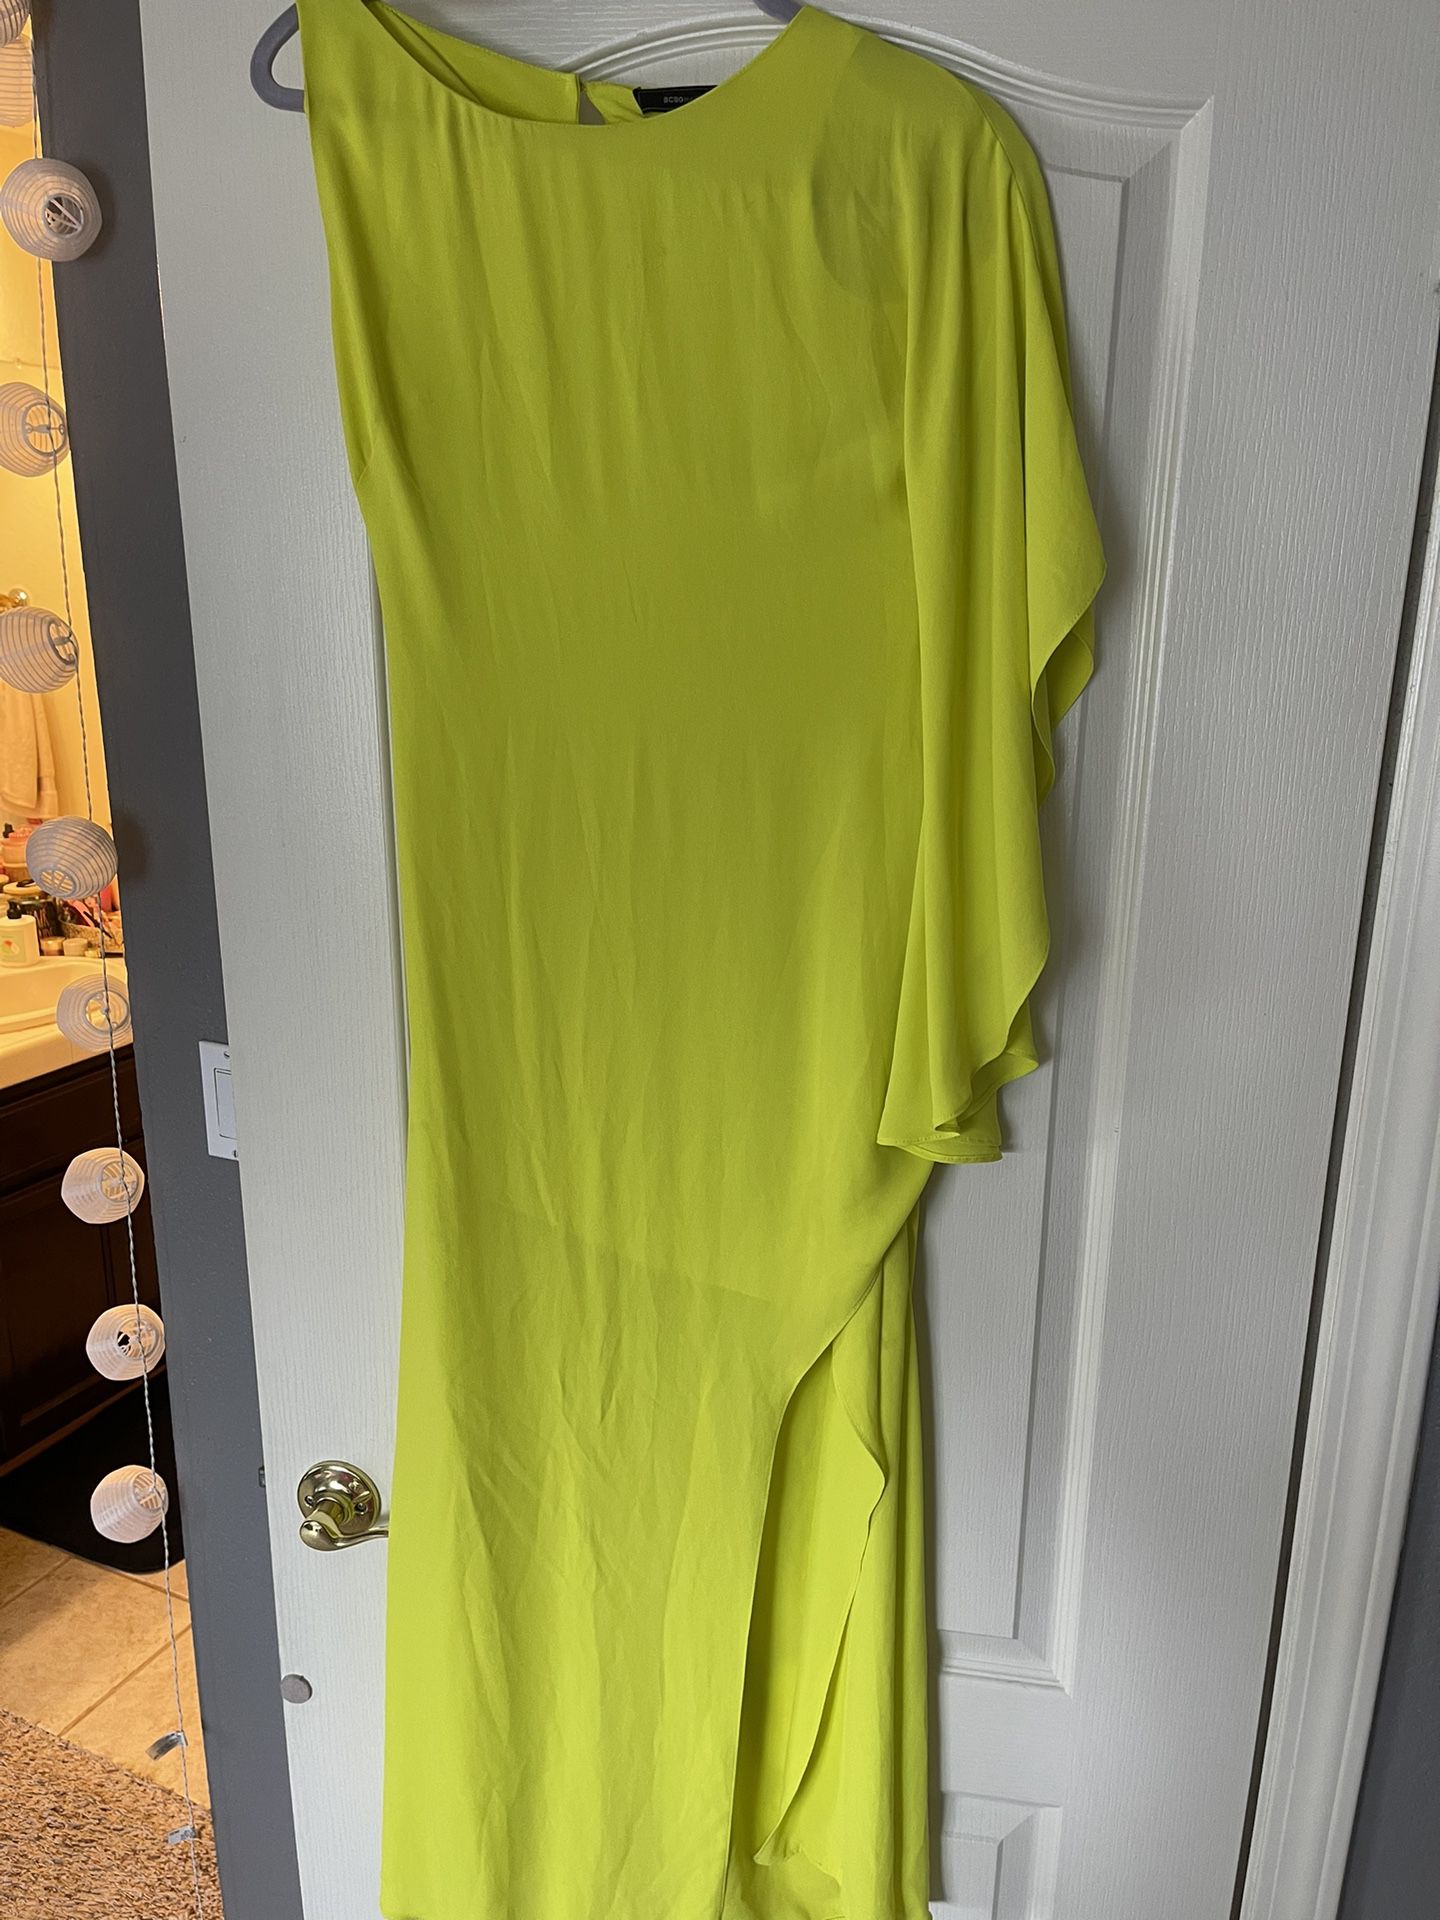 Long Neon Yellow Dress 